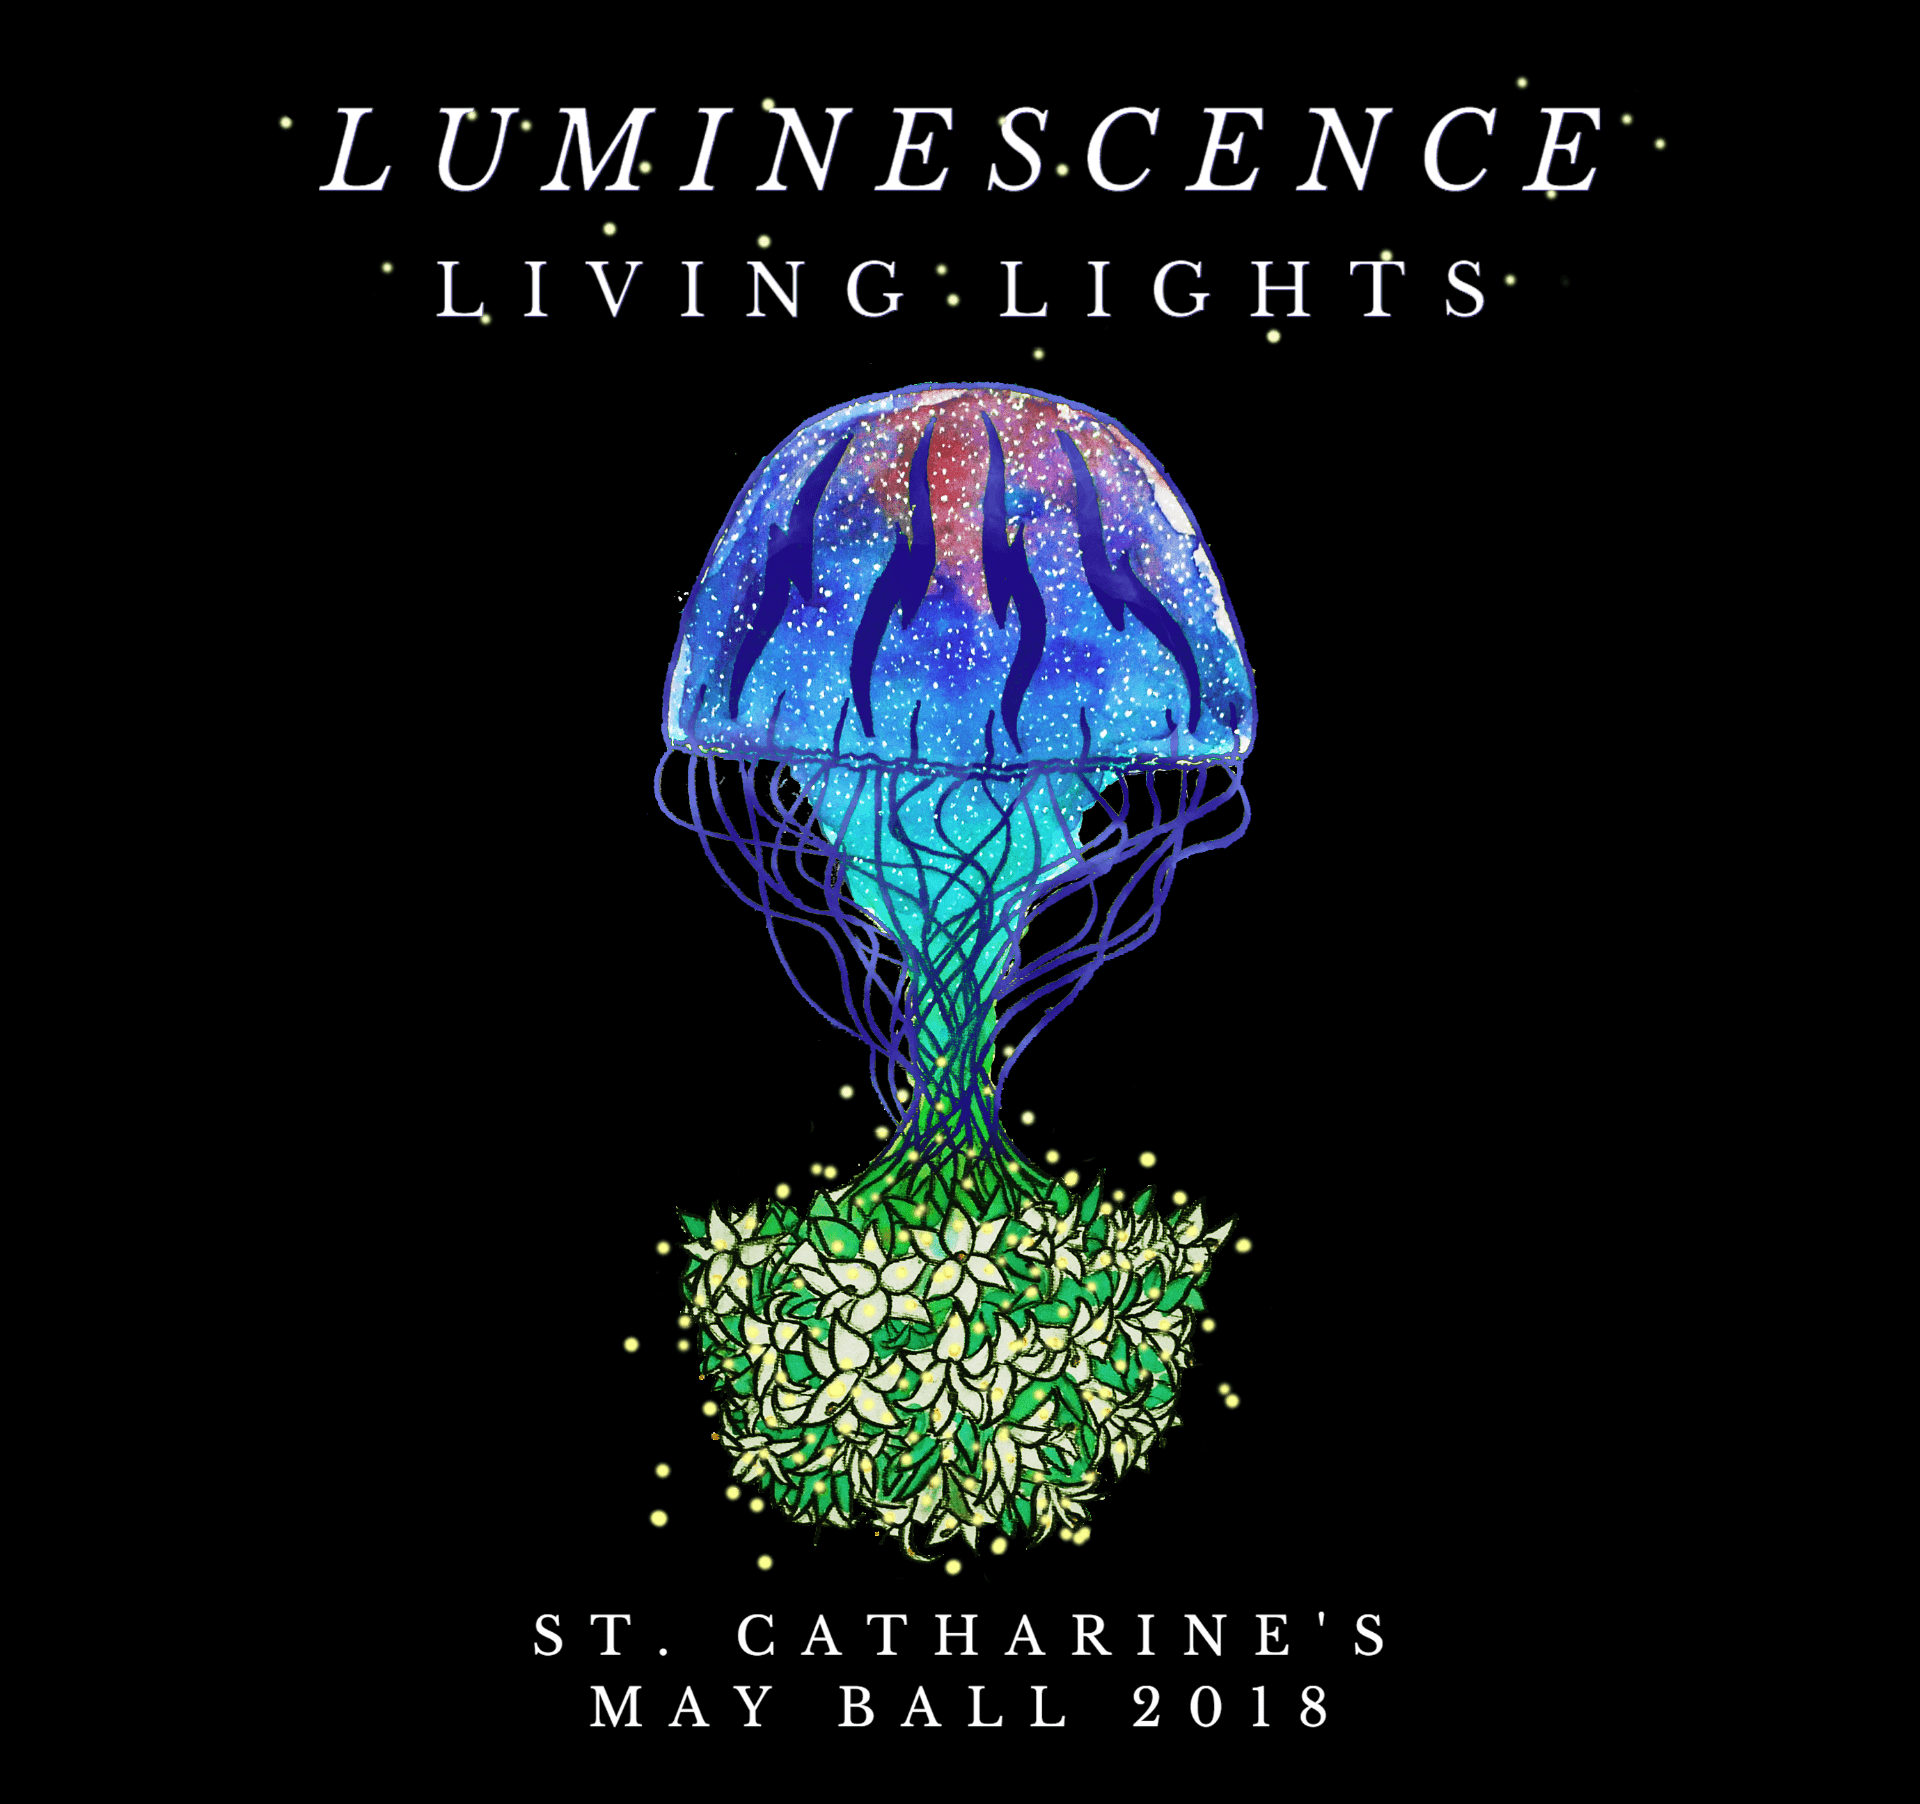 St Catherine's May Ball 2018: Luminescence Living Lights logo